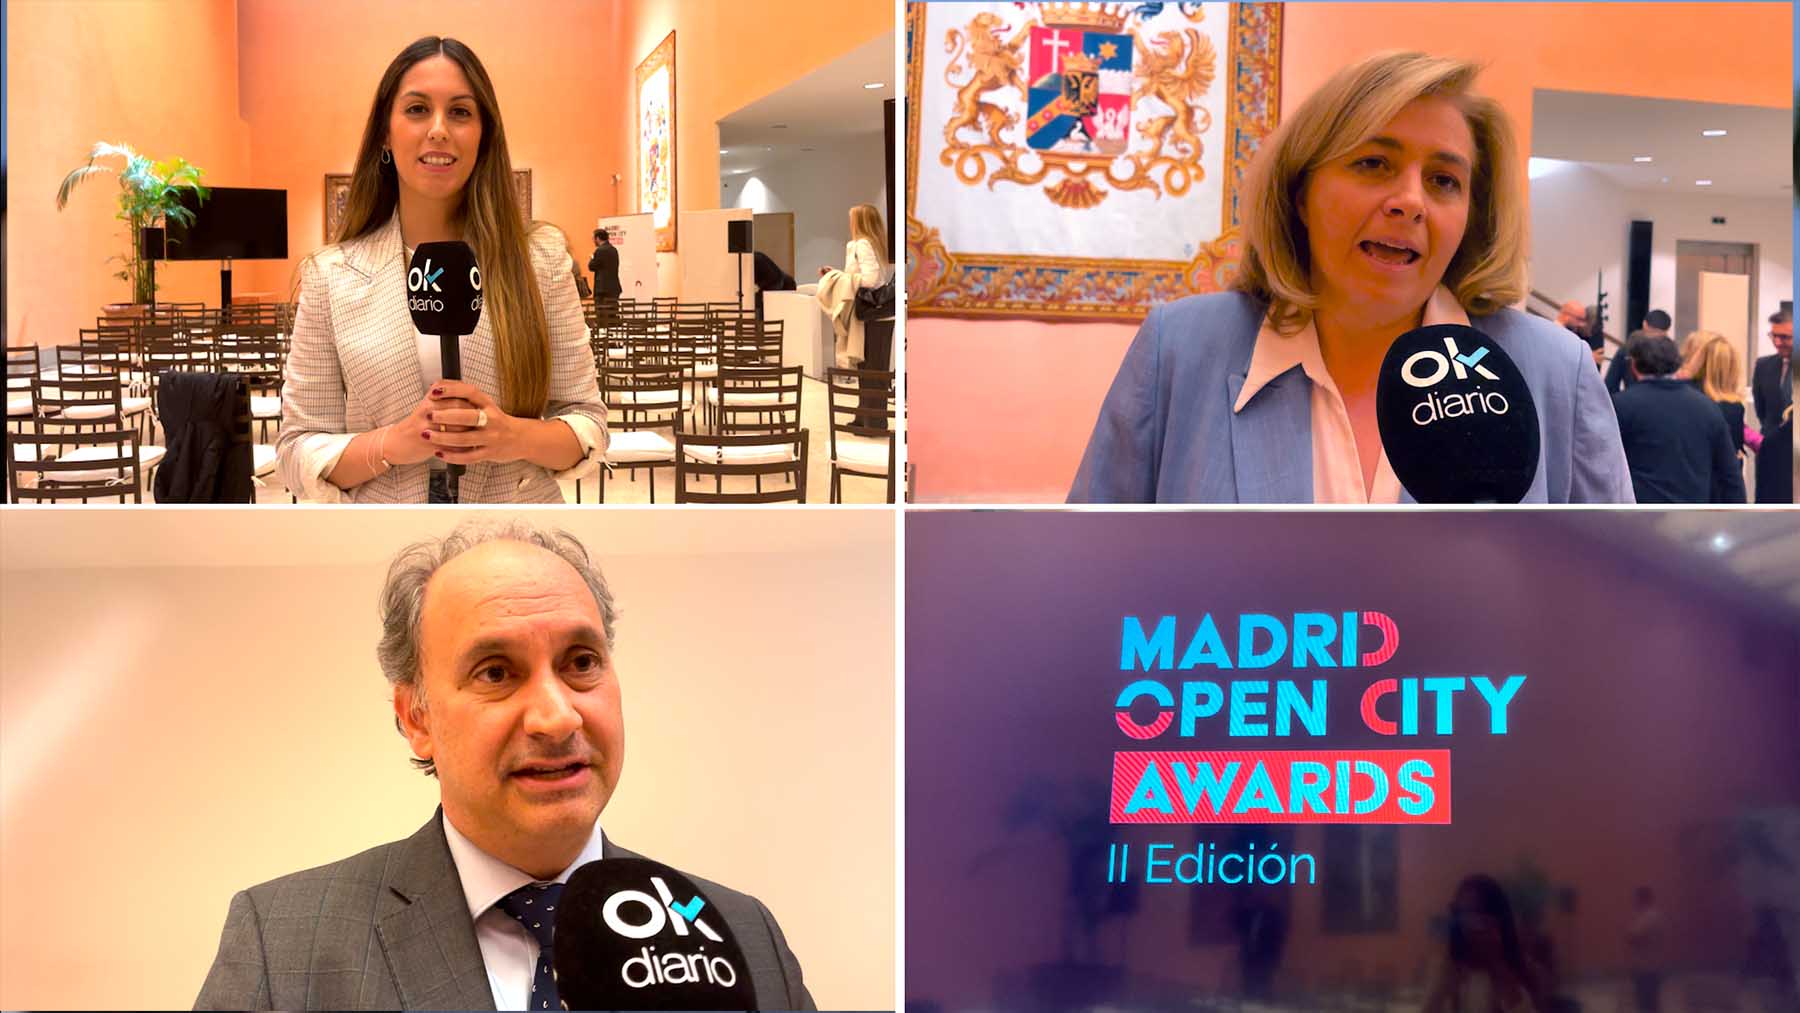 Madrid open city awards